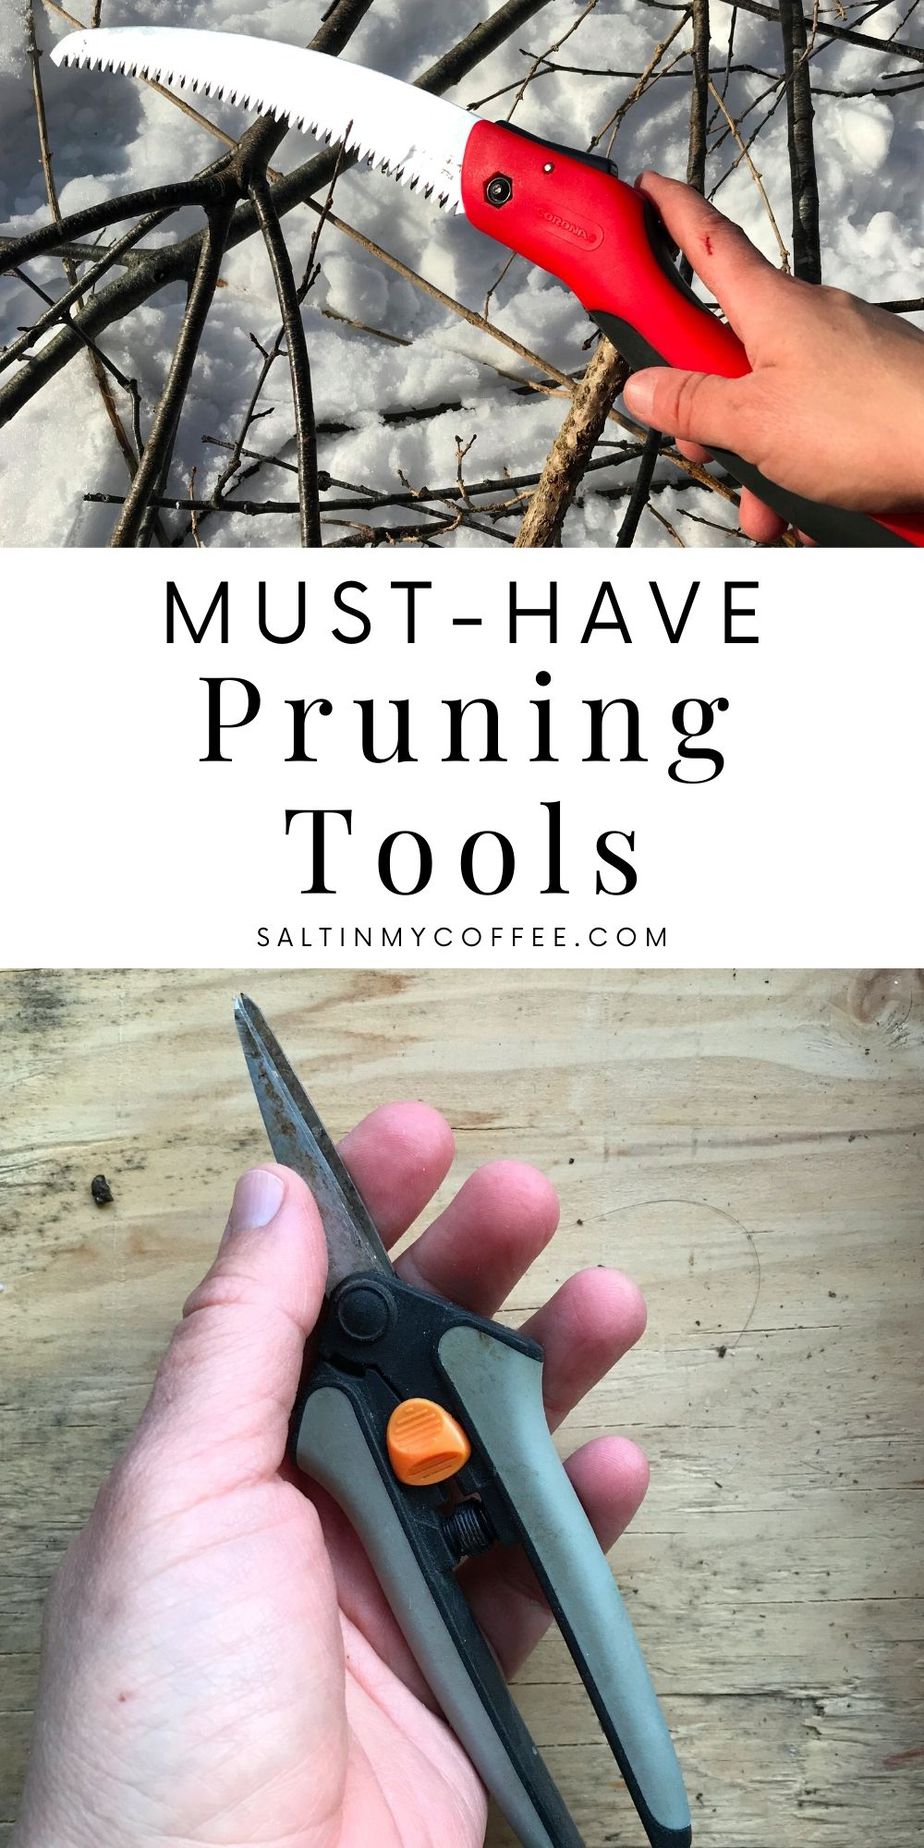 Favorite Pruning Tools